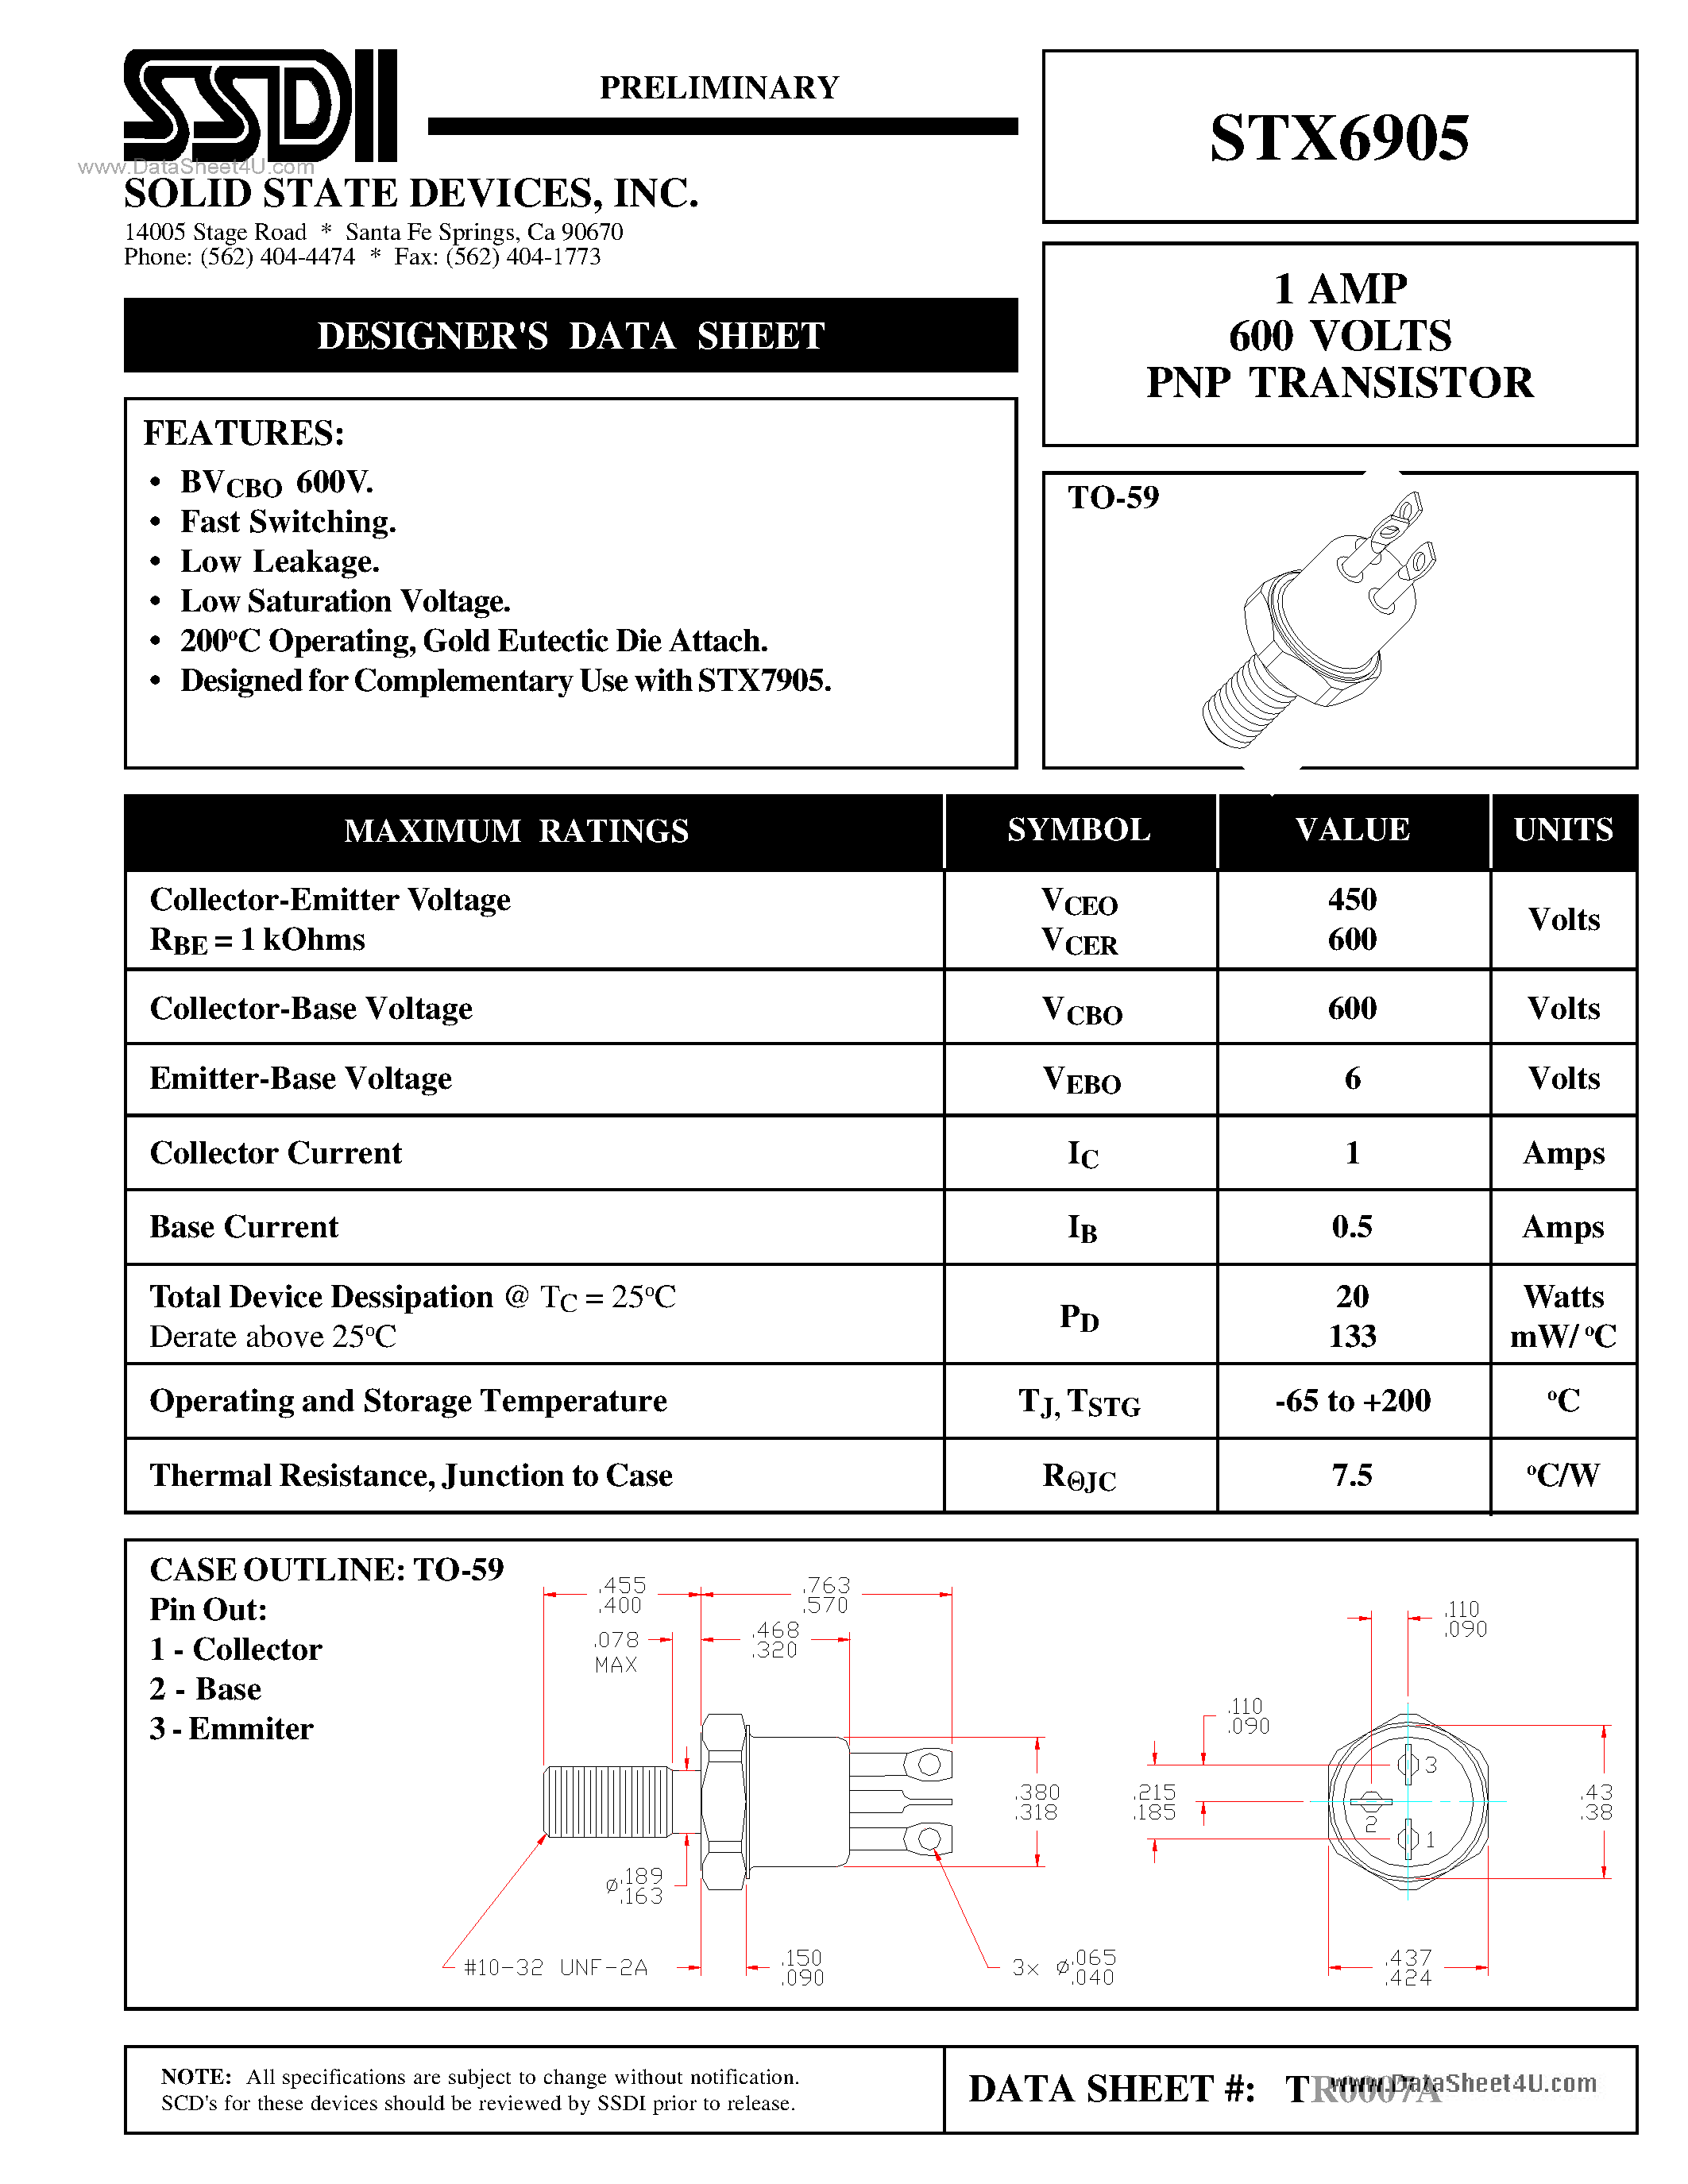 Datasheet STX6905 - 1 AMP 600 VOLTS PNP TRANSISTOR page 1